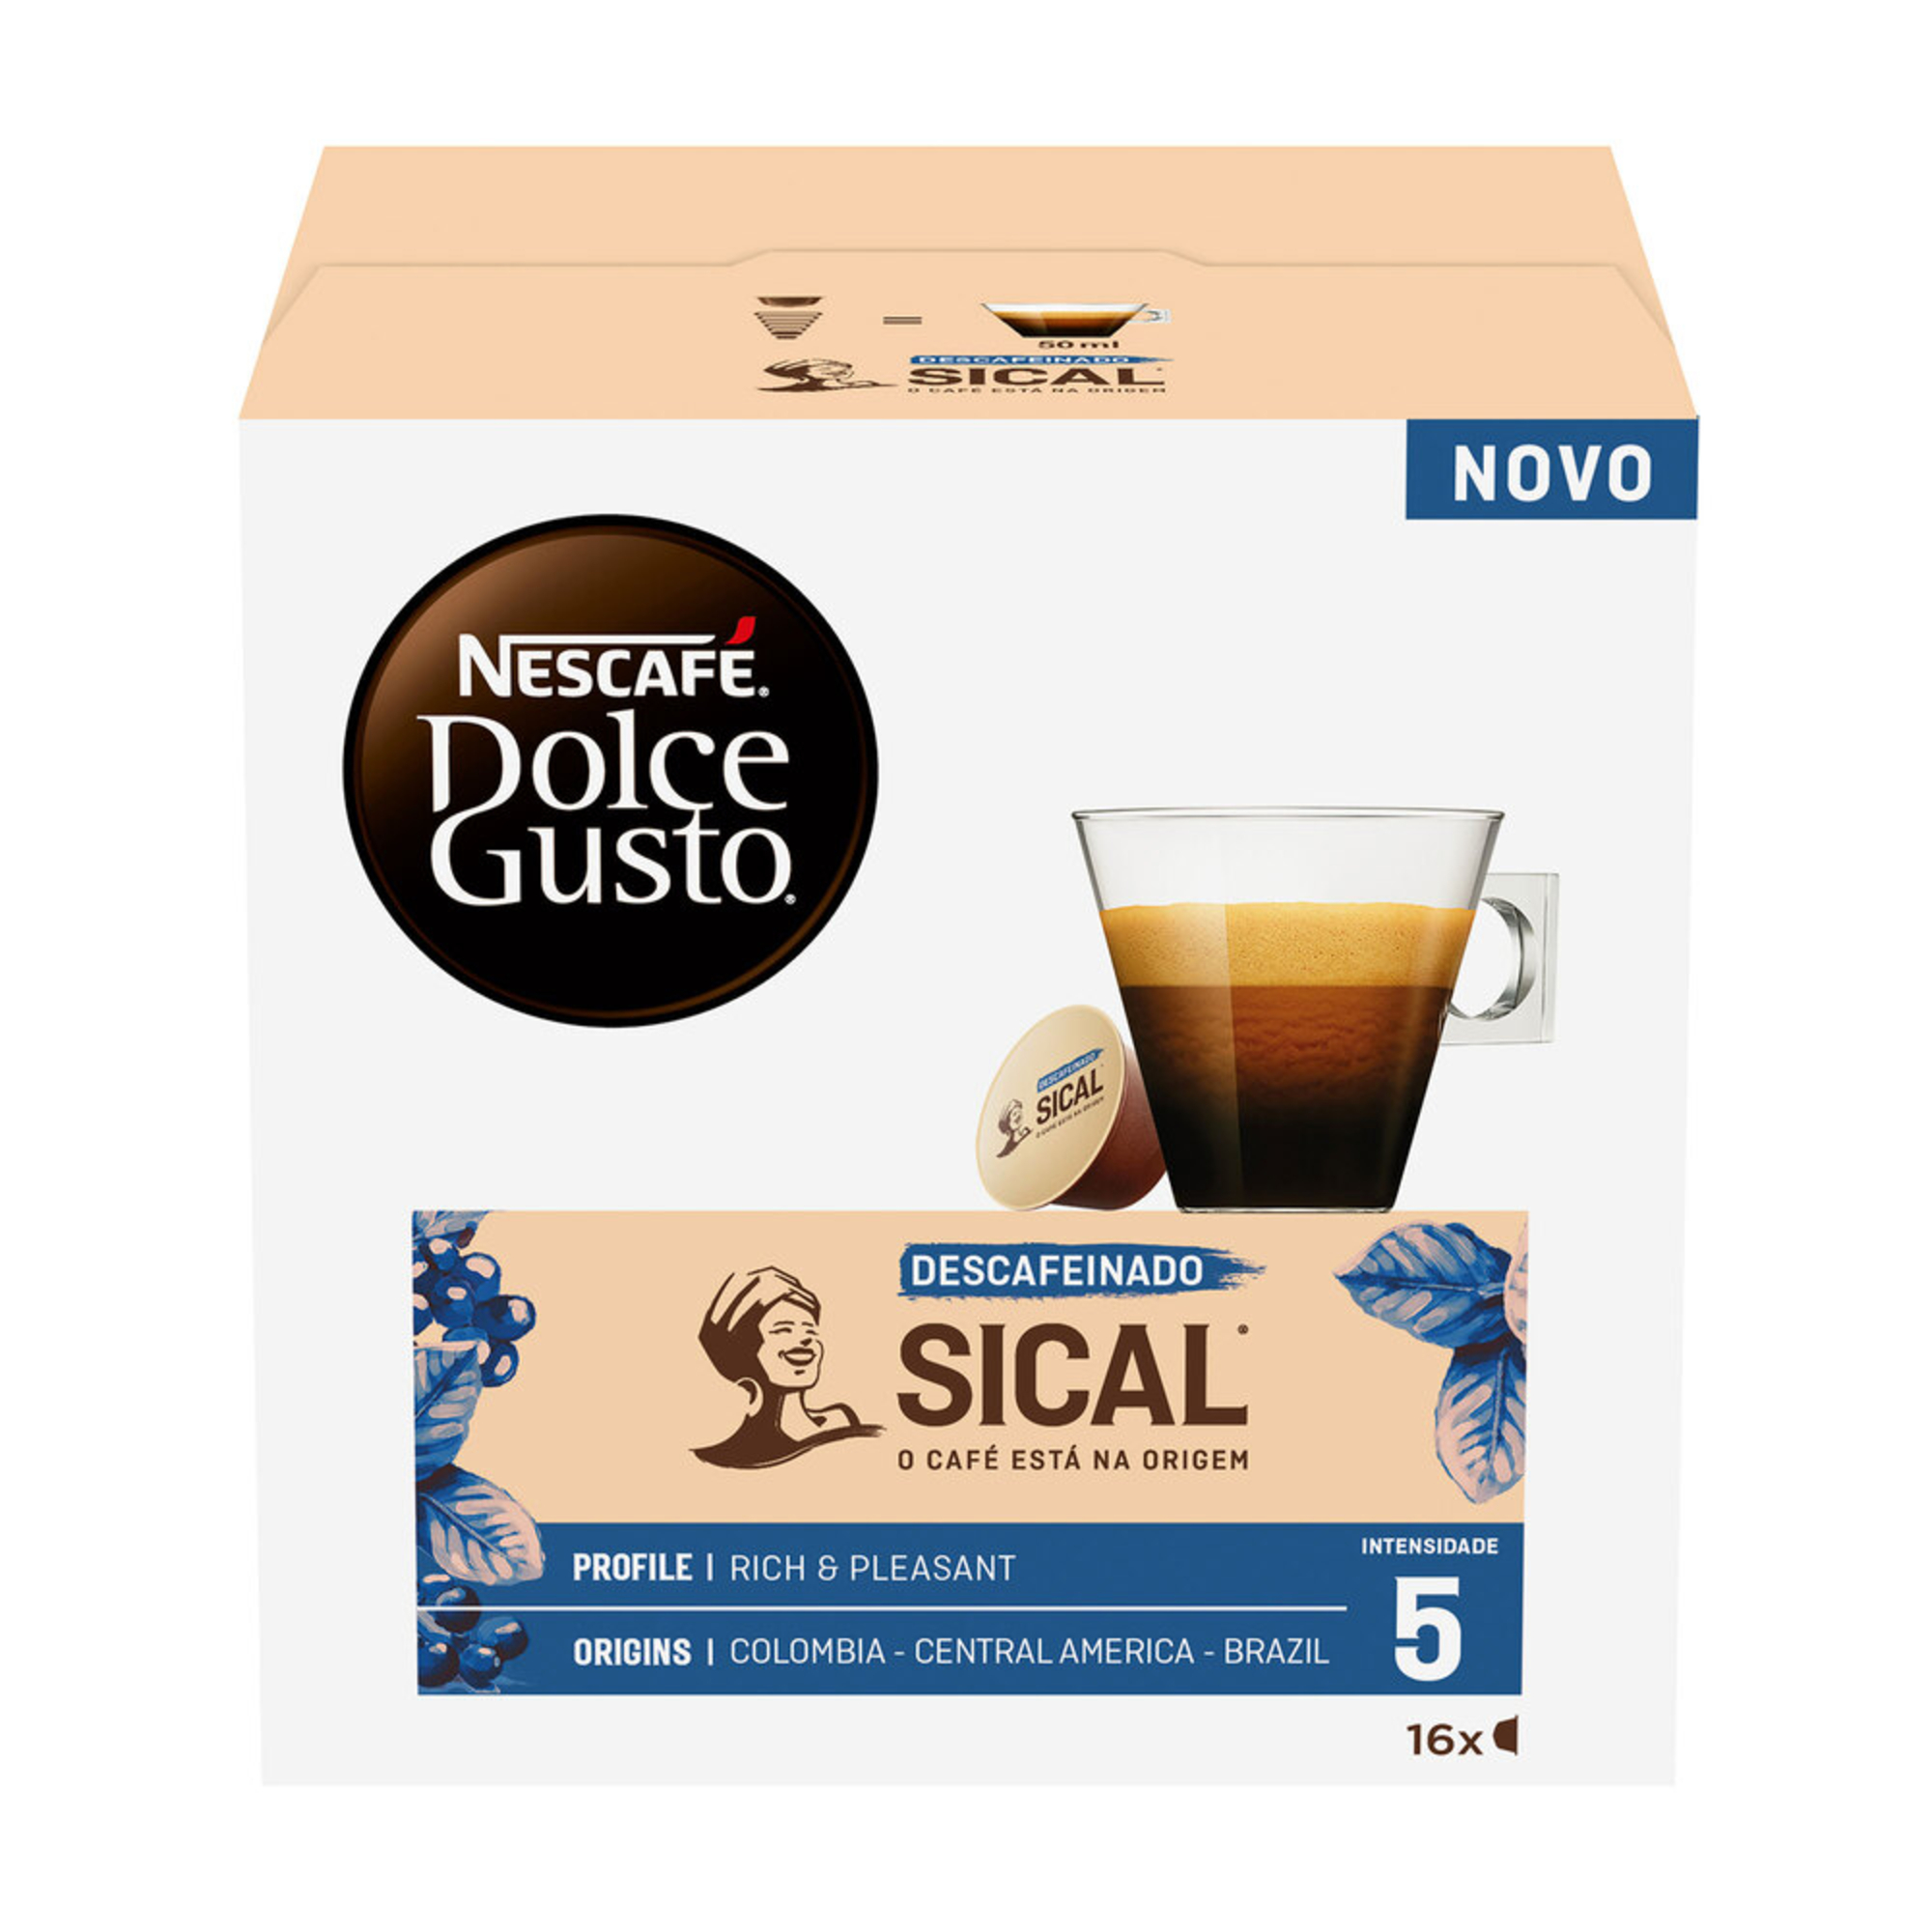 Nescafe Dolce Gusto Espresso Descafeinado 16 cápsulas, comprar online